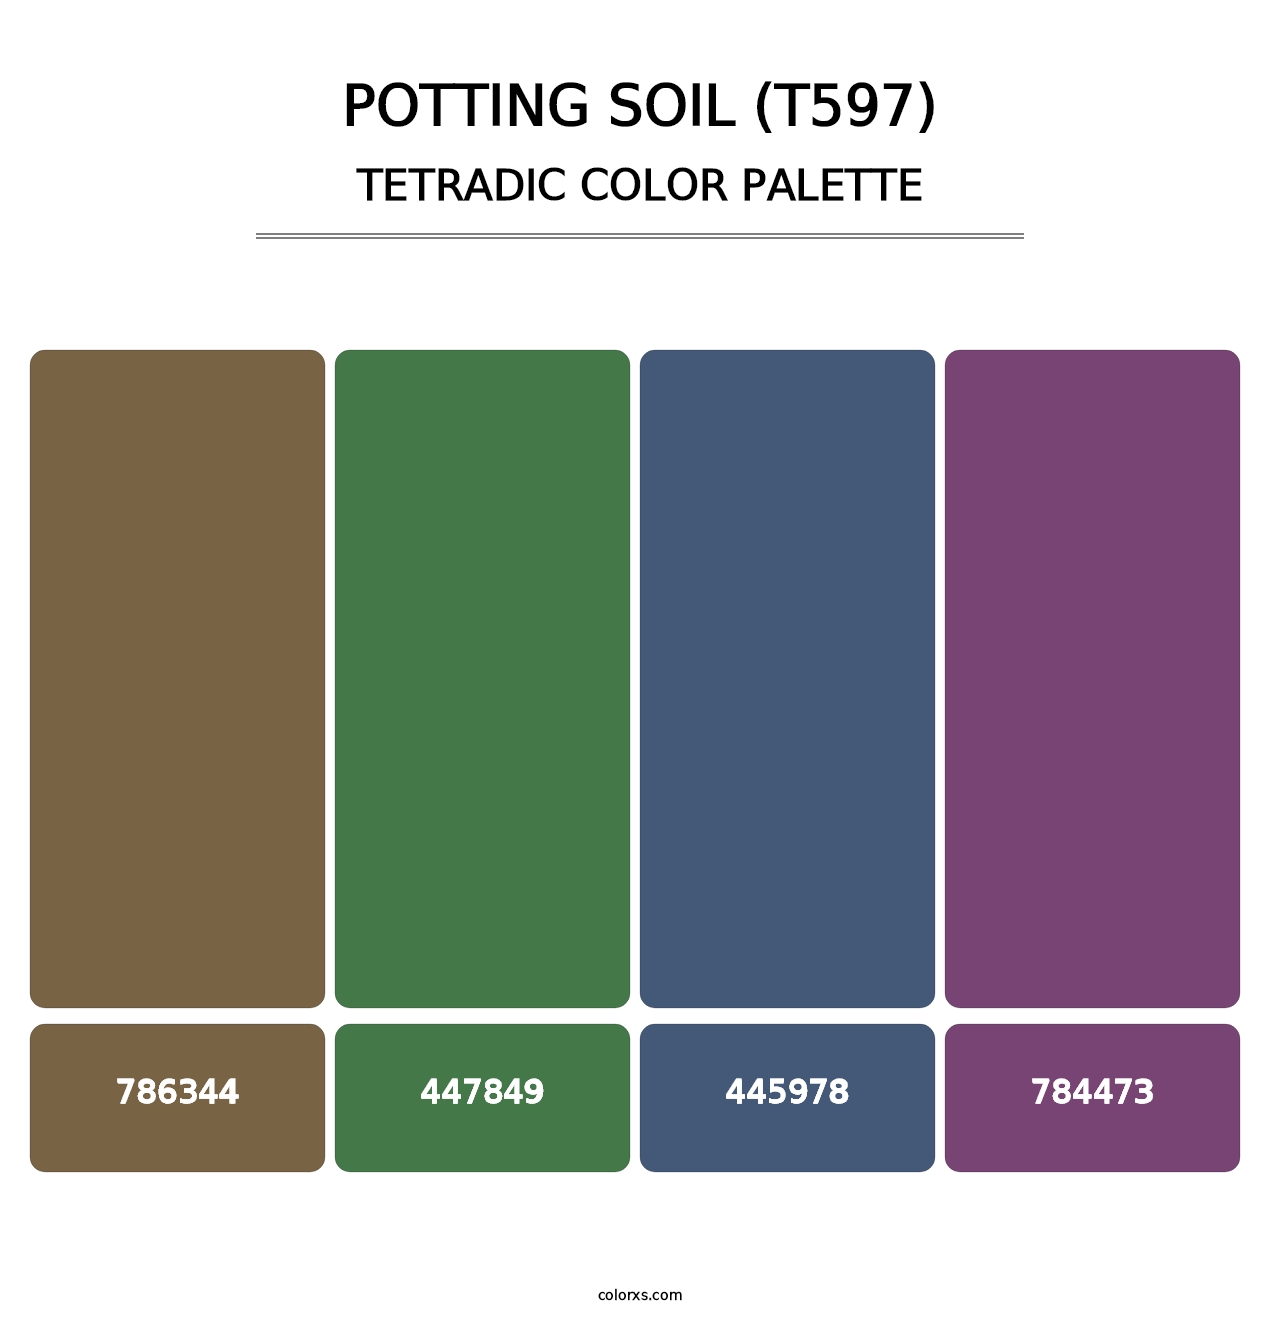 Potting Soil (T597) - Tetradic Color Palette